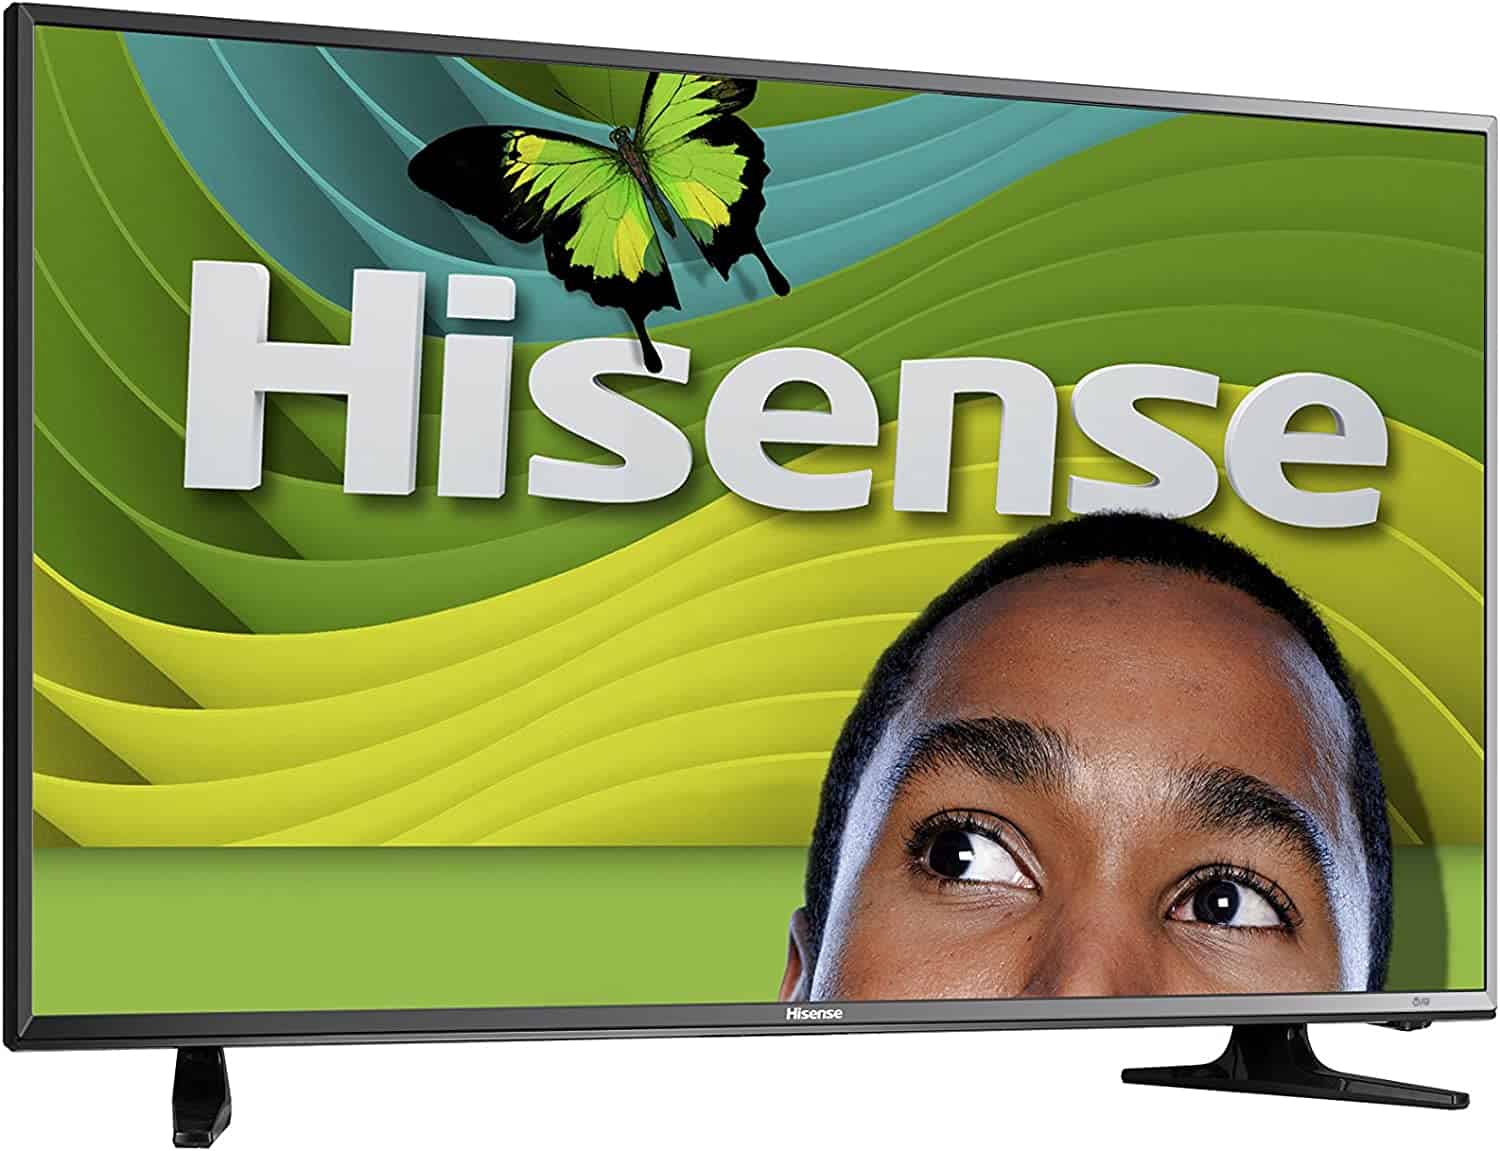 Hisense 32H3B1 32-Inch 720p LED TV Review